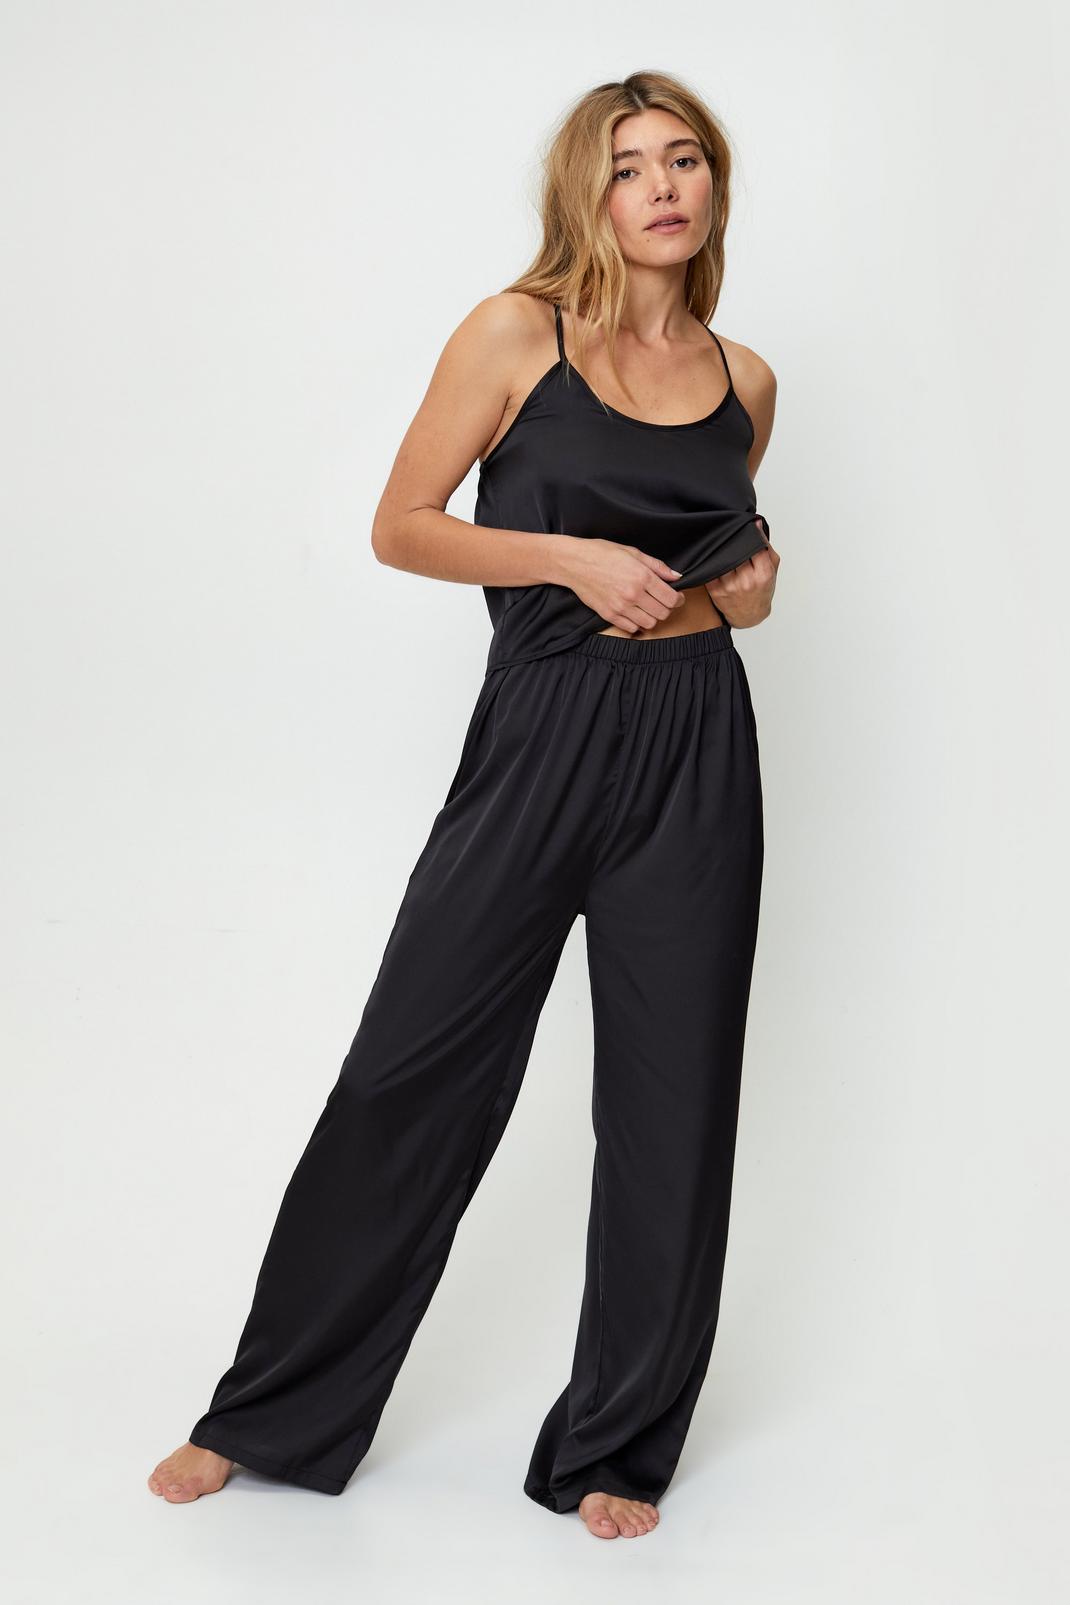 Black Satin Lace Trim Cami Pants Pajama Set image number 1